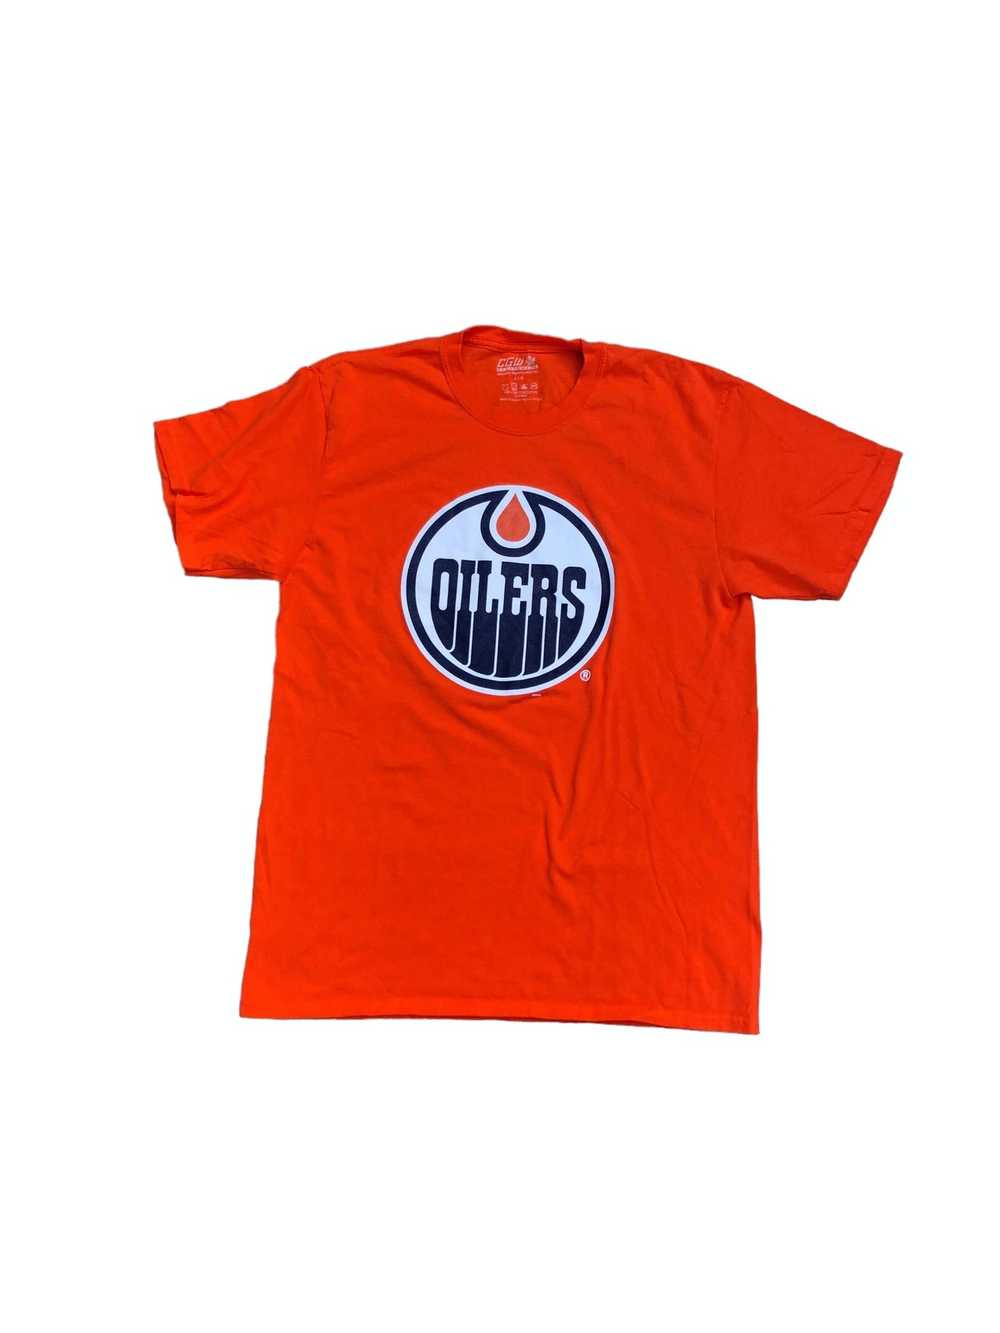 NHL Vintage CGW Edmonton Oilers Shirt Orange Large - image 1